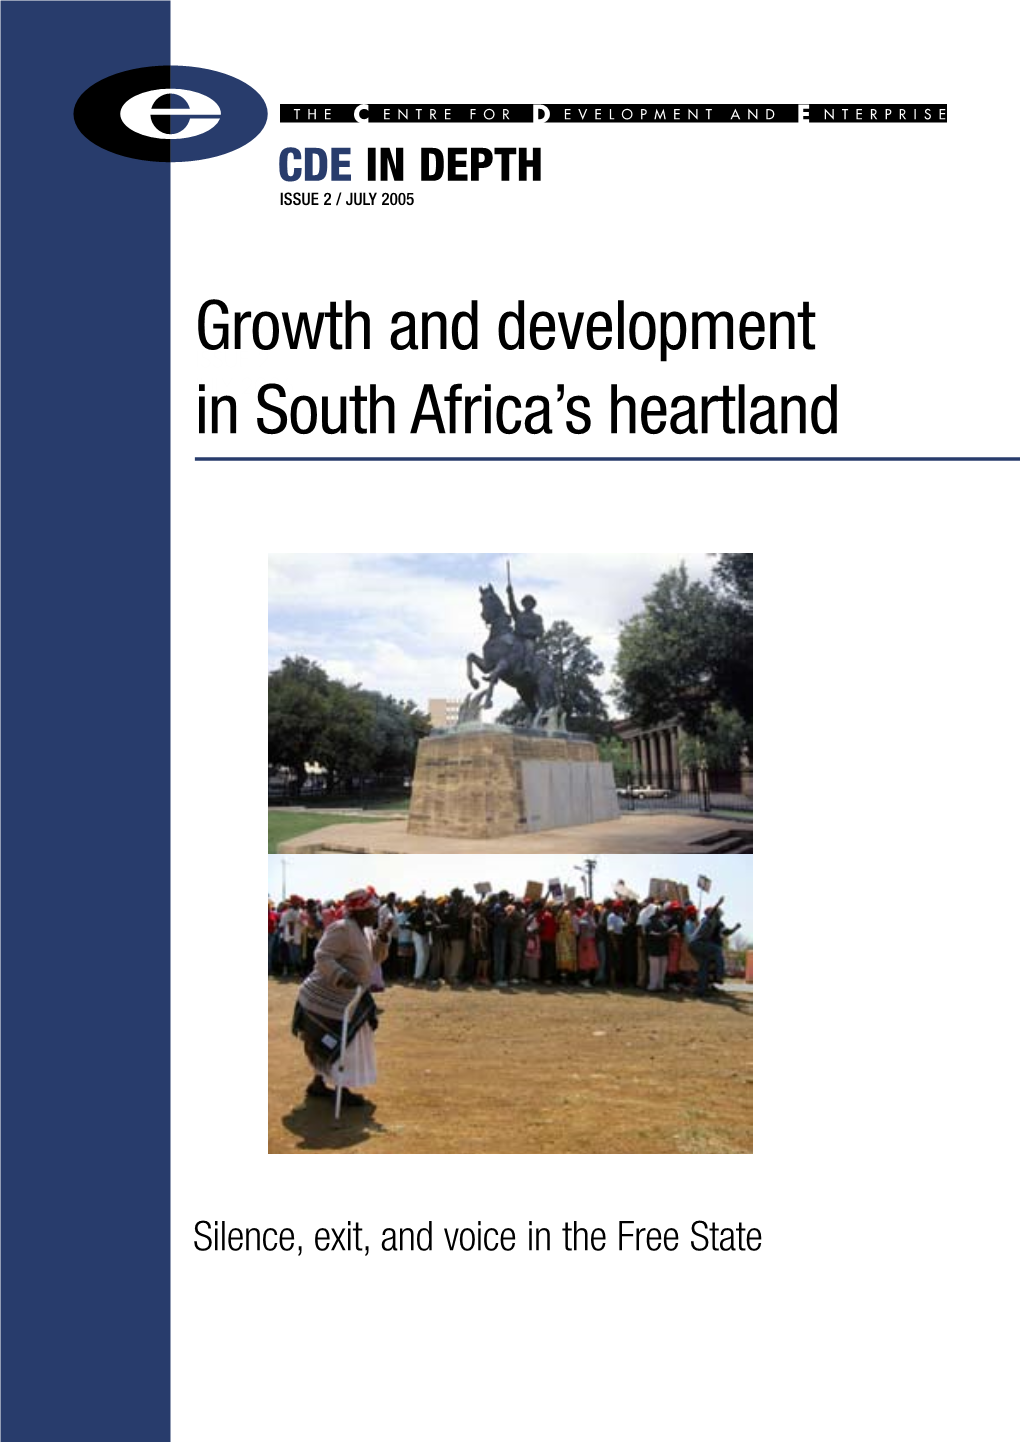 Growth & Development in SA Heartland 2005